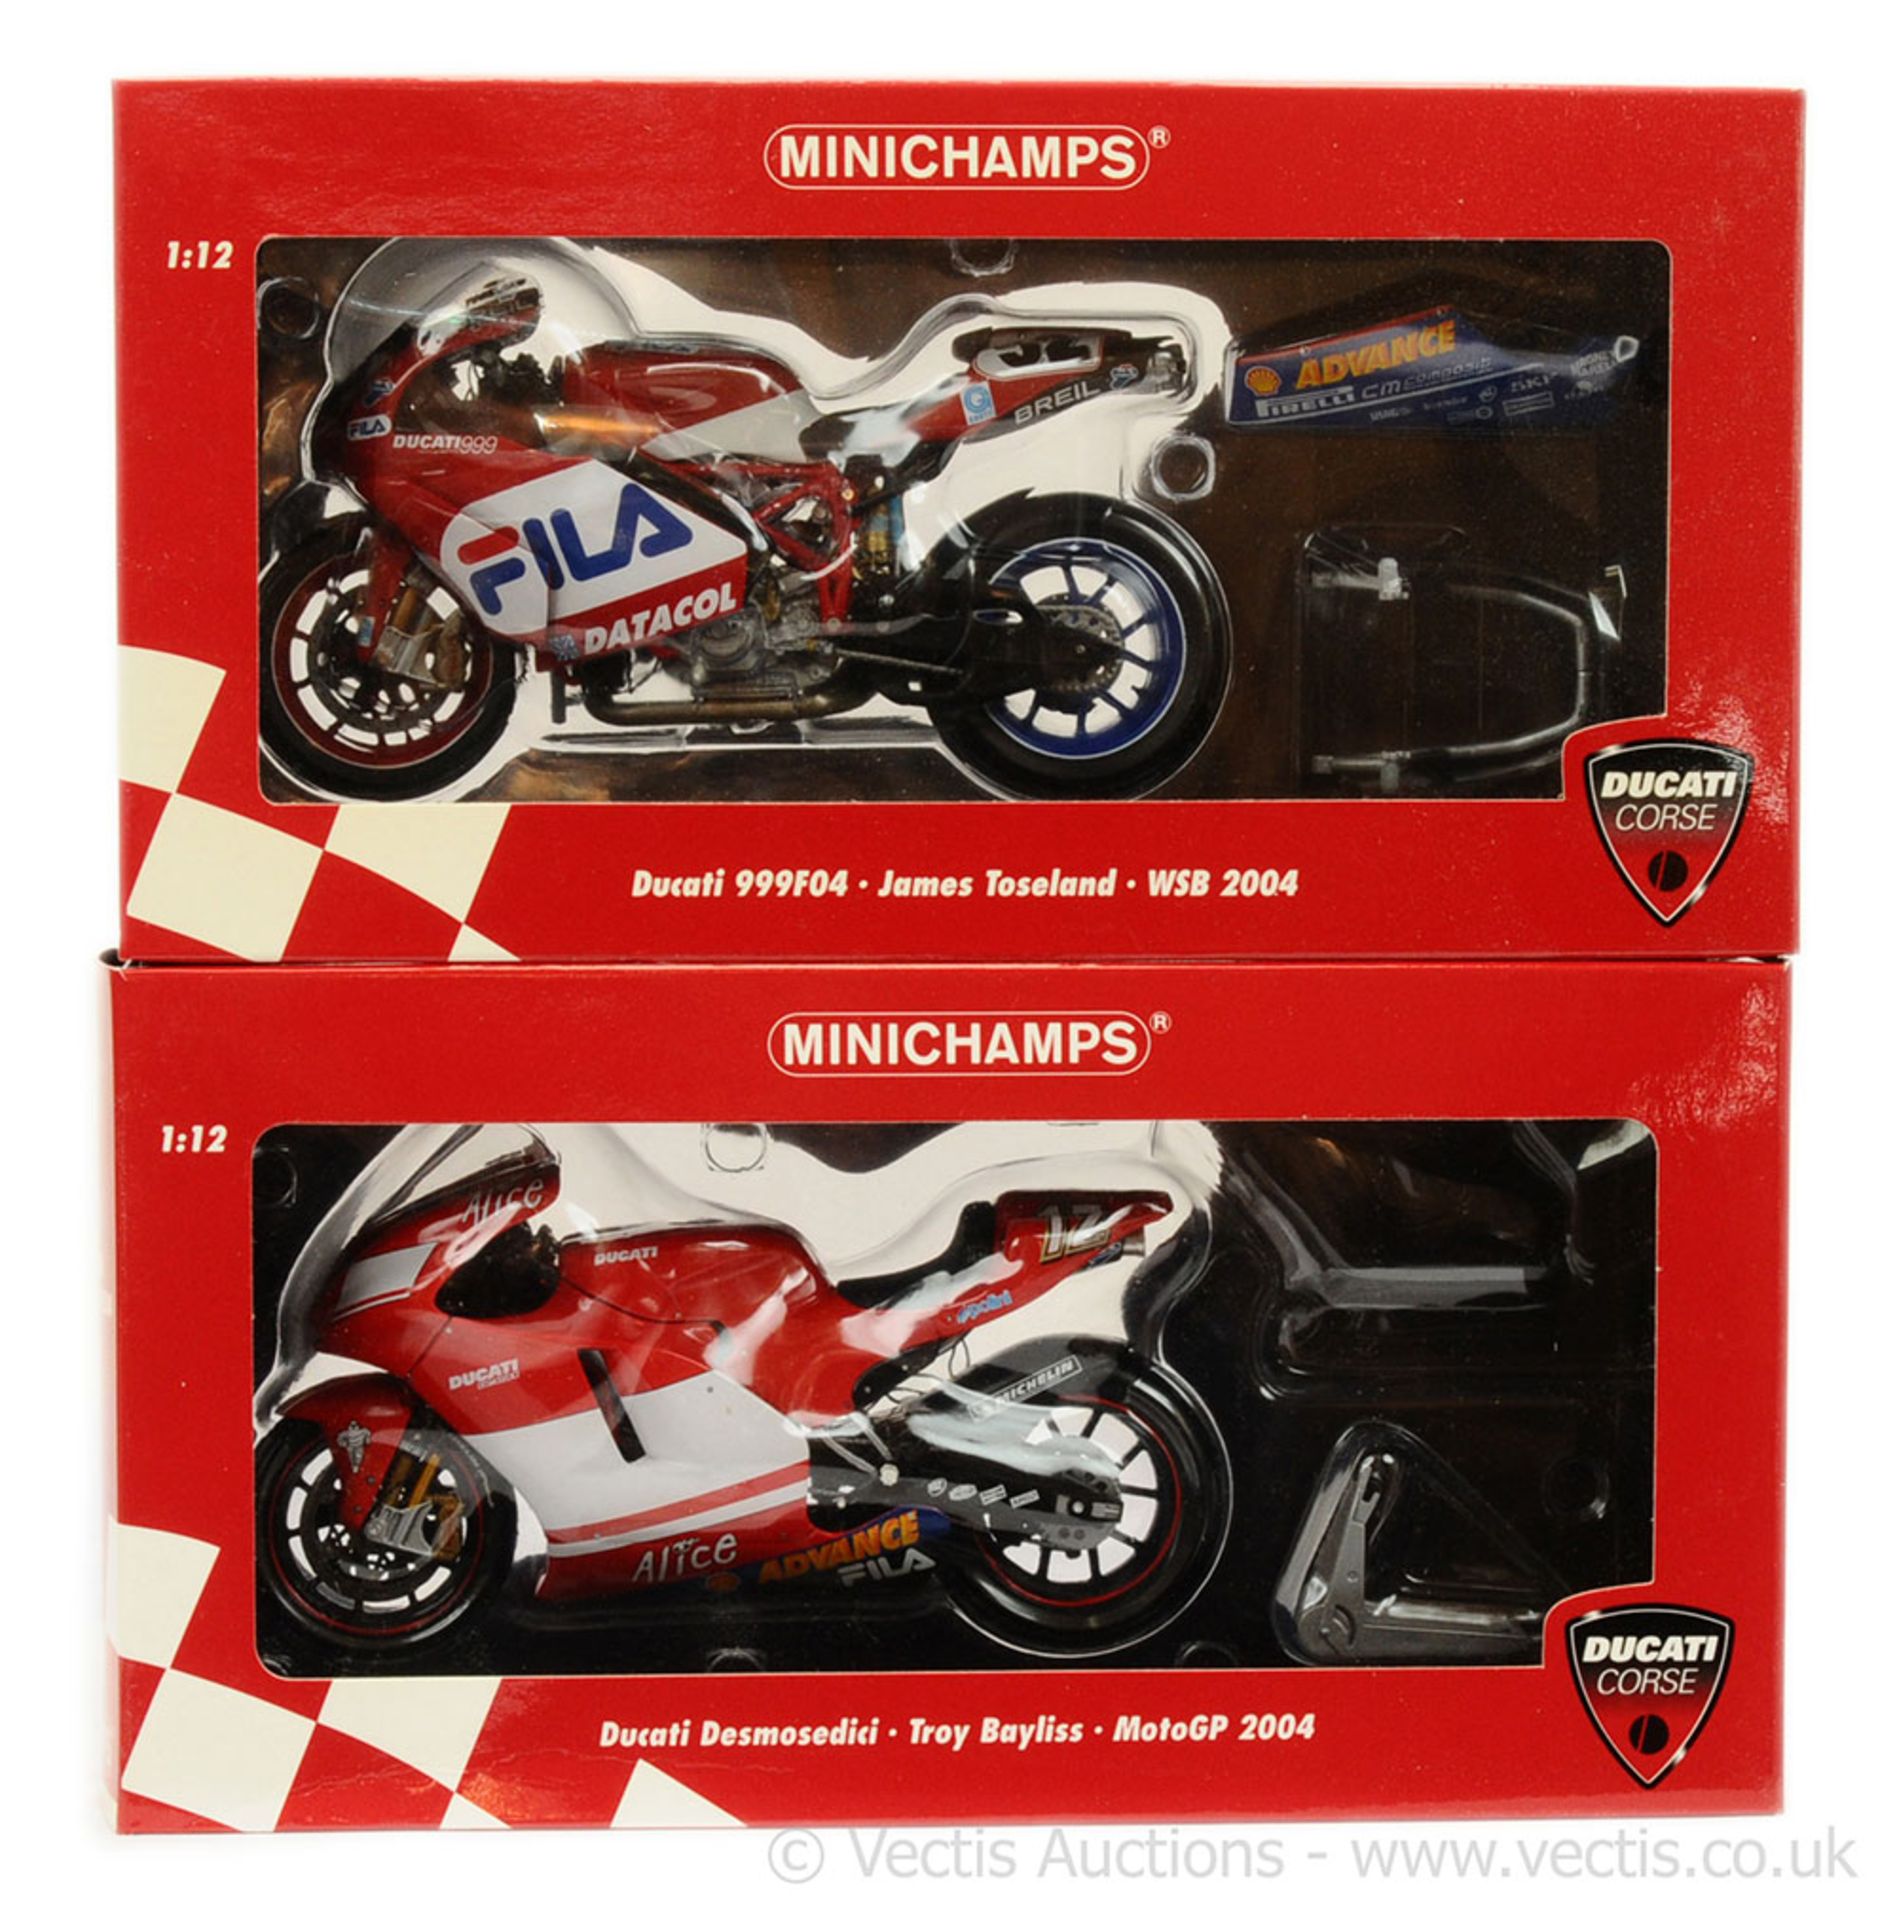 Minichamps (1/12 Scale) - a (1) 122040012 Ducati